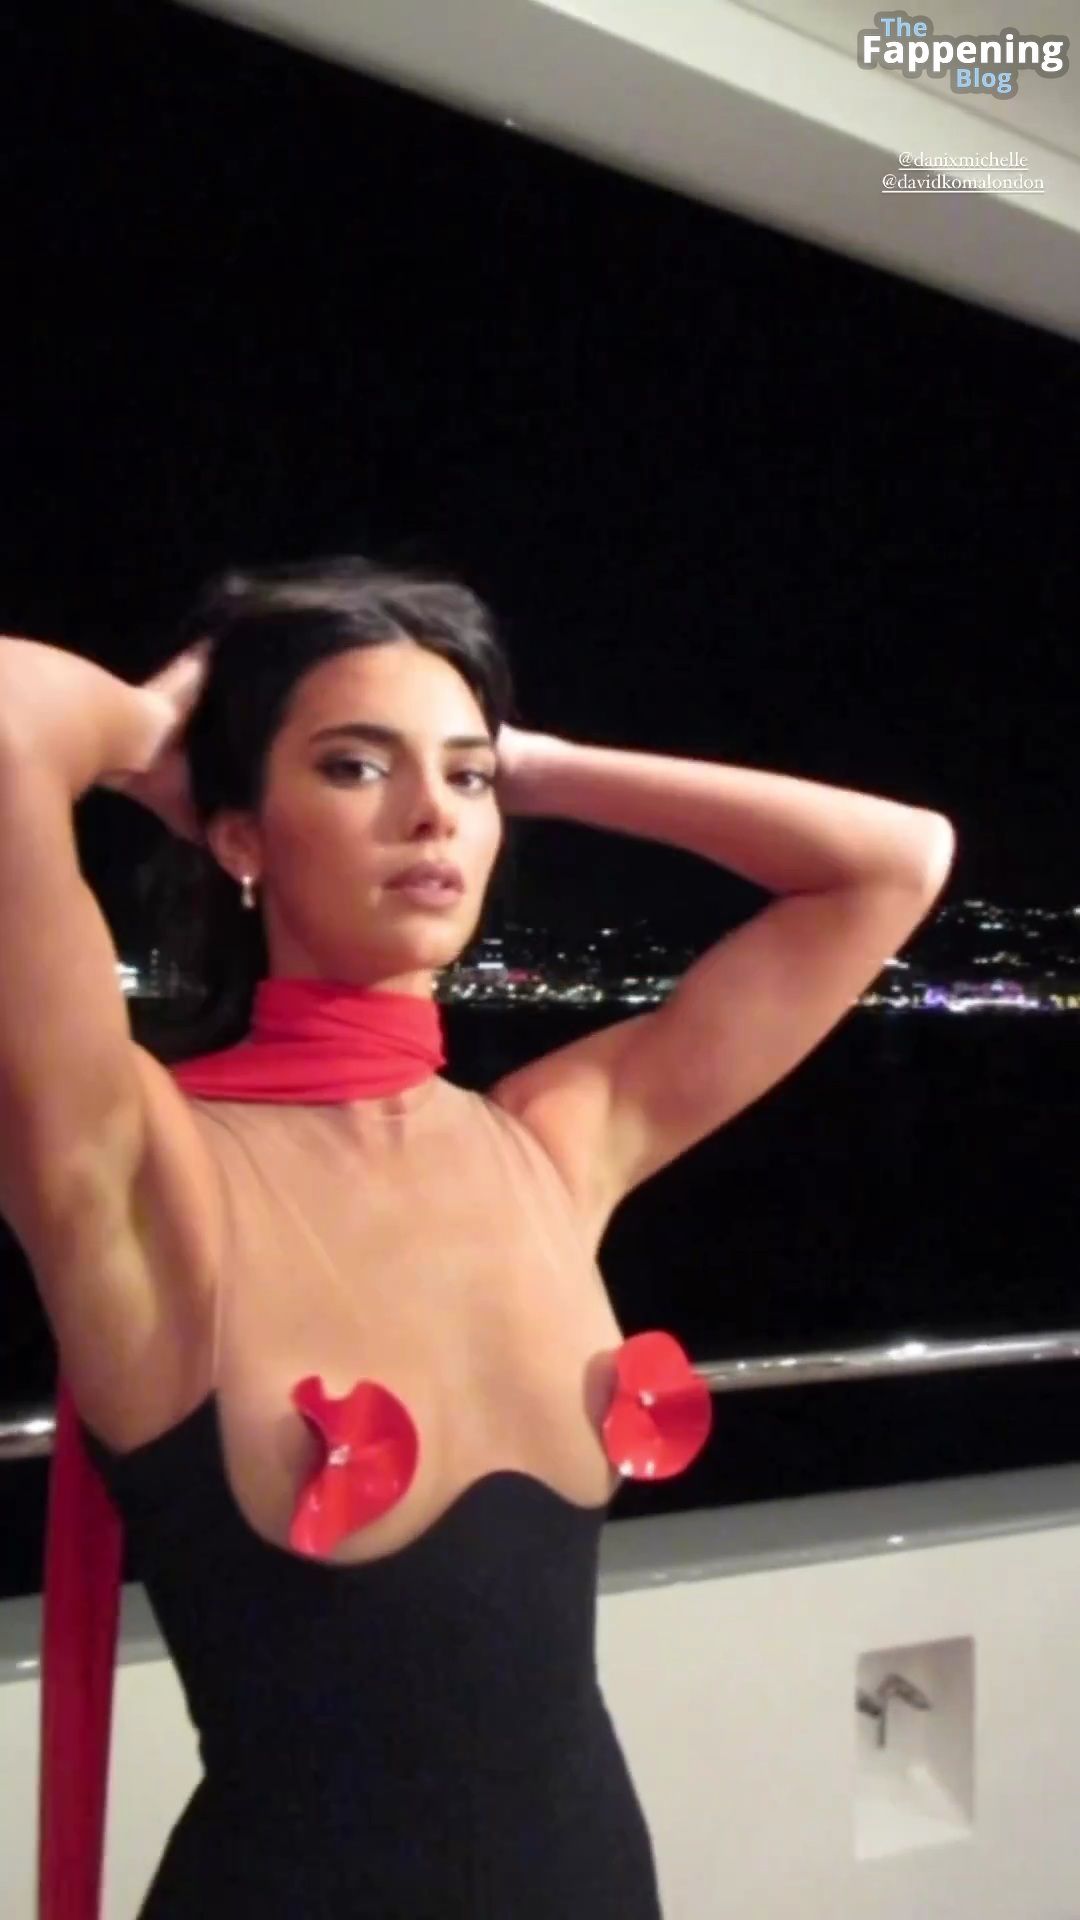 Kendall-Jenner-Topless-The-Fappening-Blog-7-1.jpg